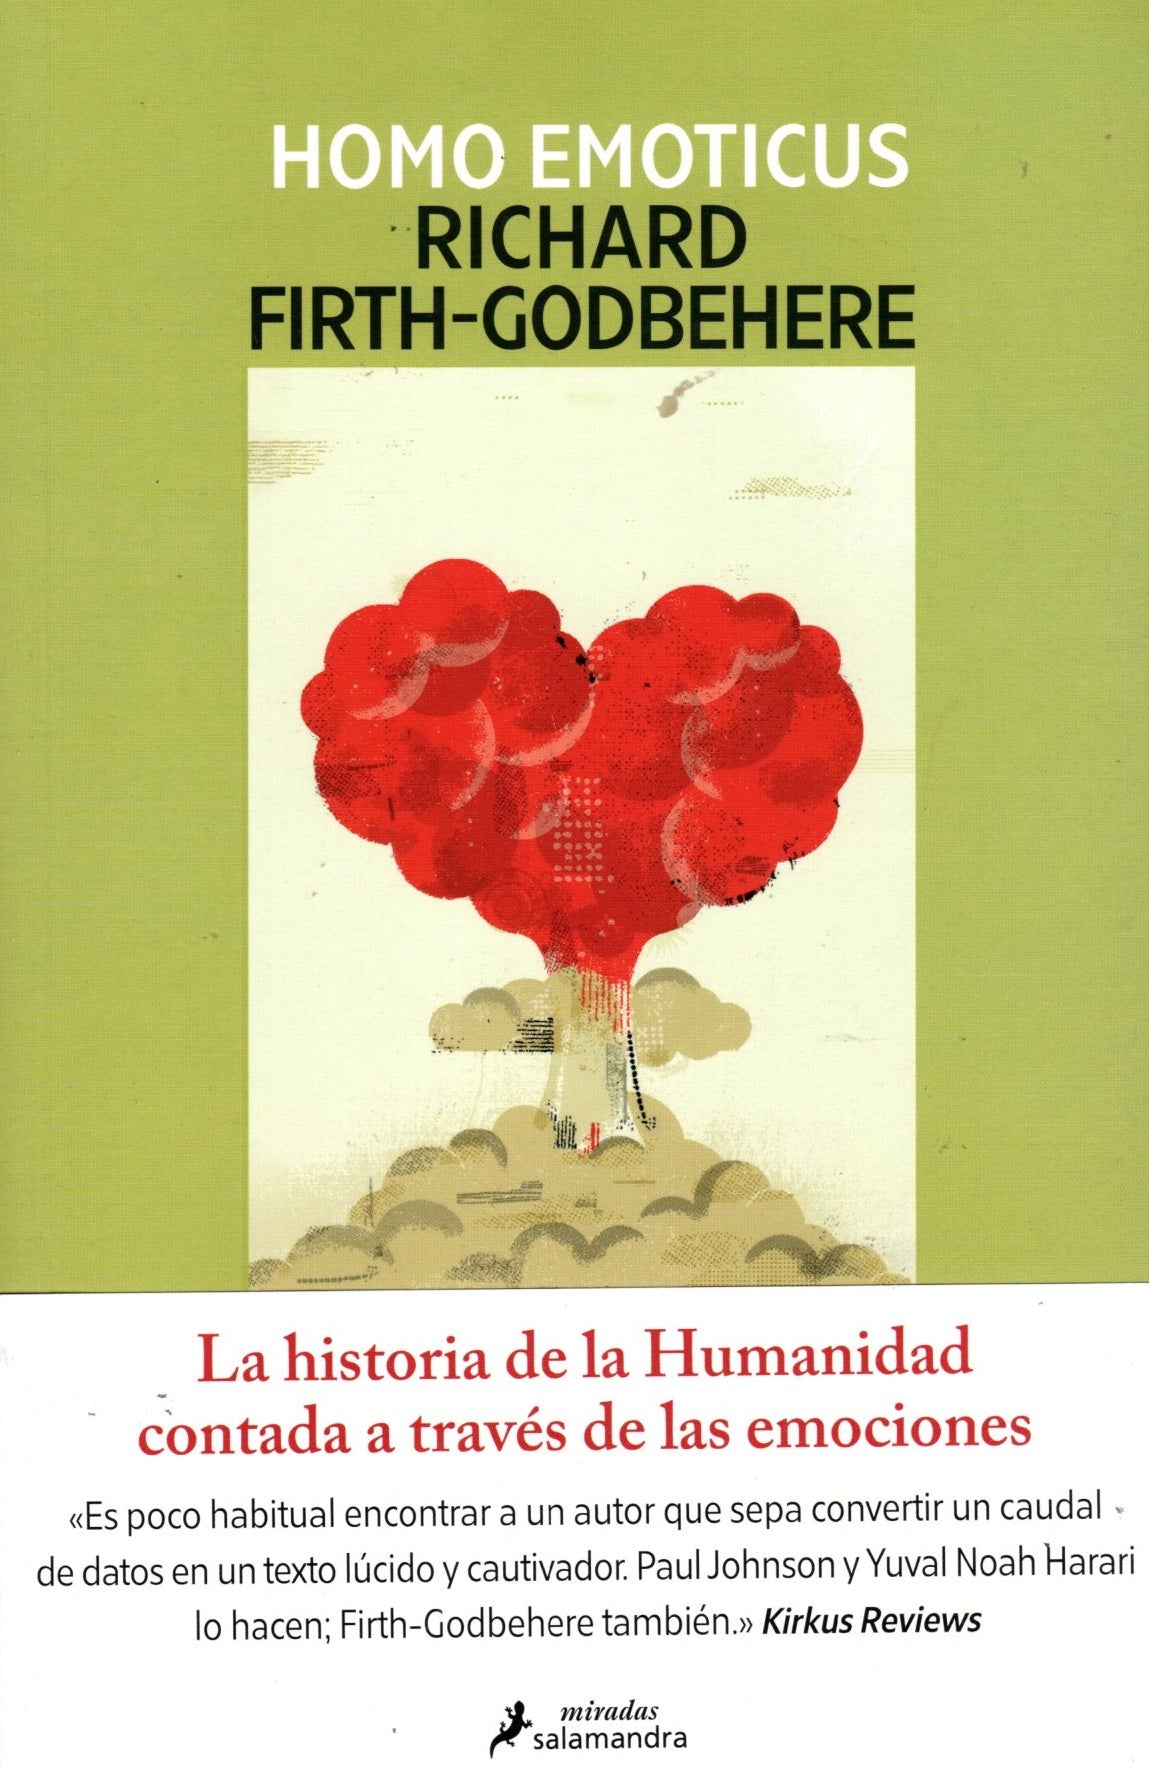 Libro Richard Firth-Godbehere - Homo emoticus